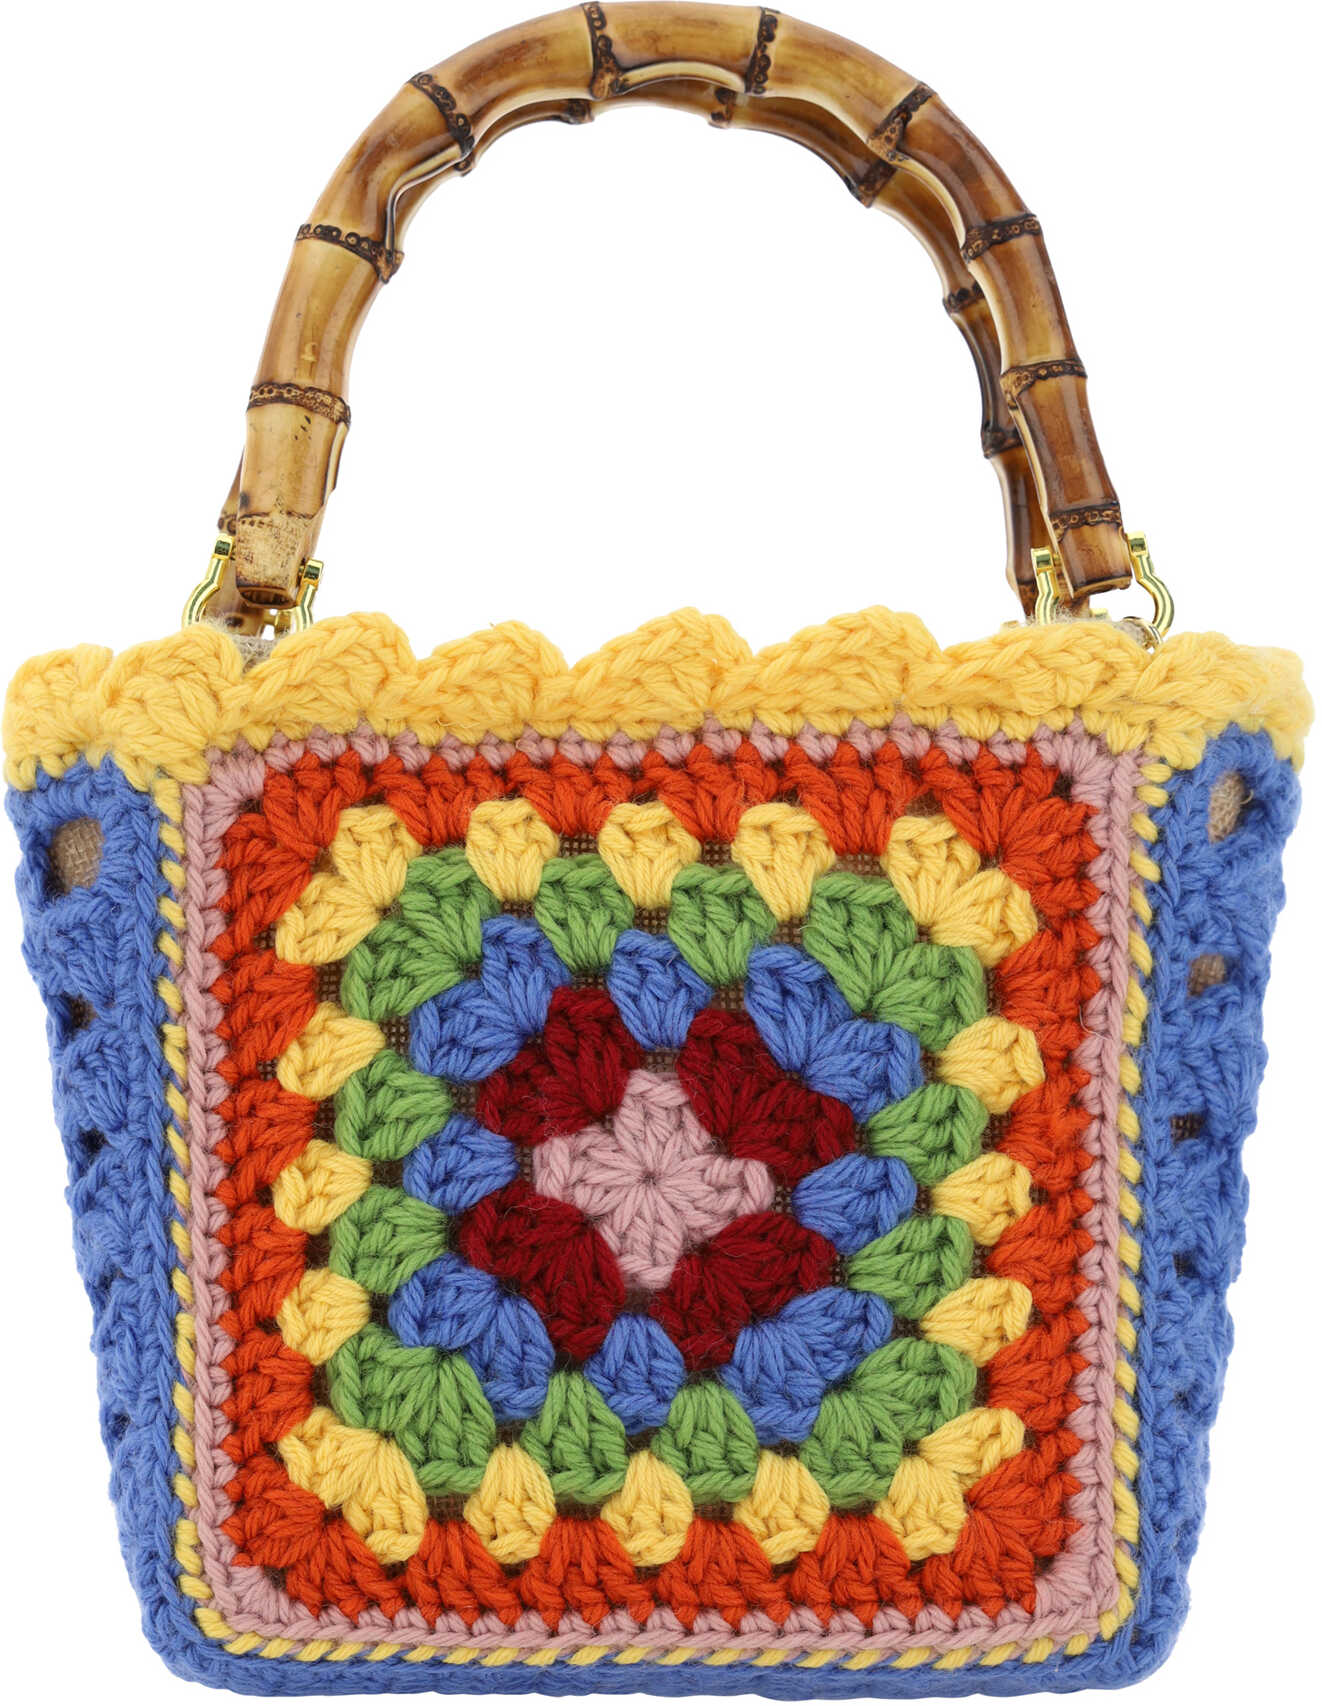 LA MILANESA Crochet Handbag 000